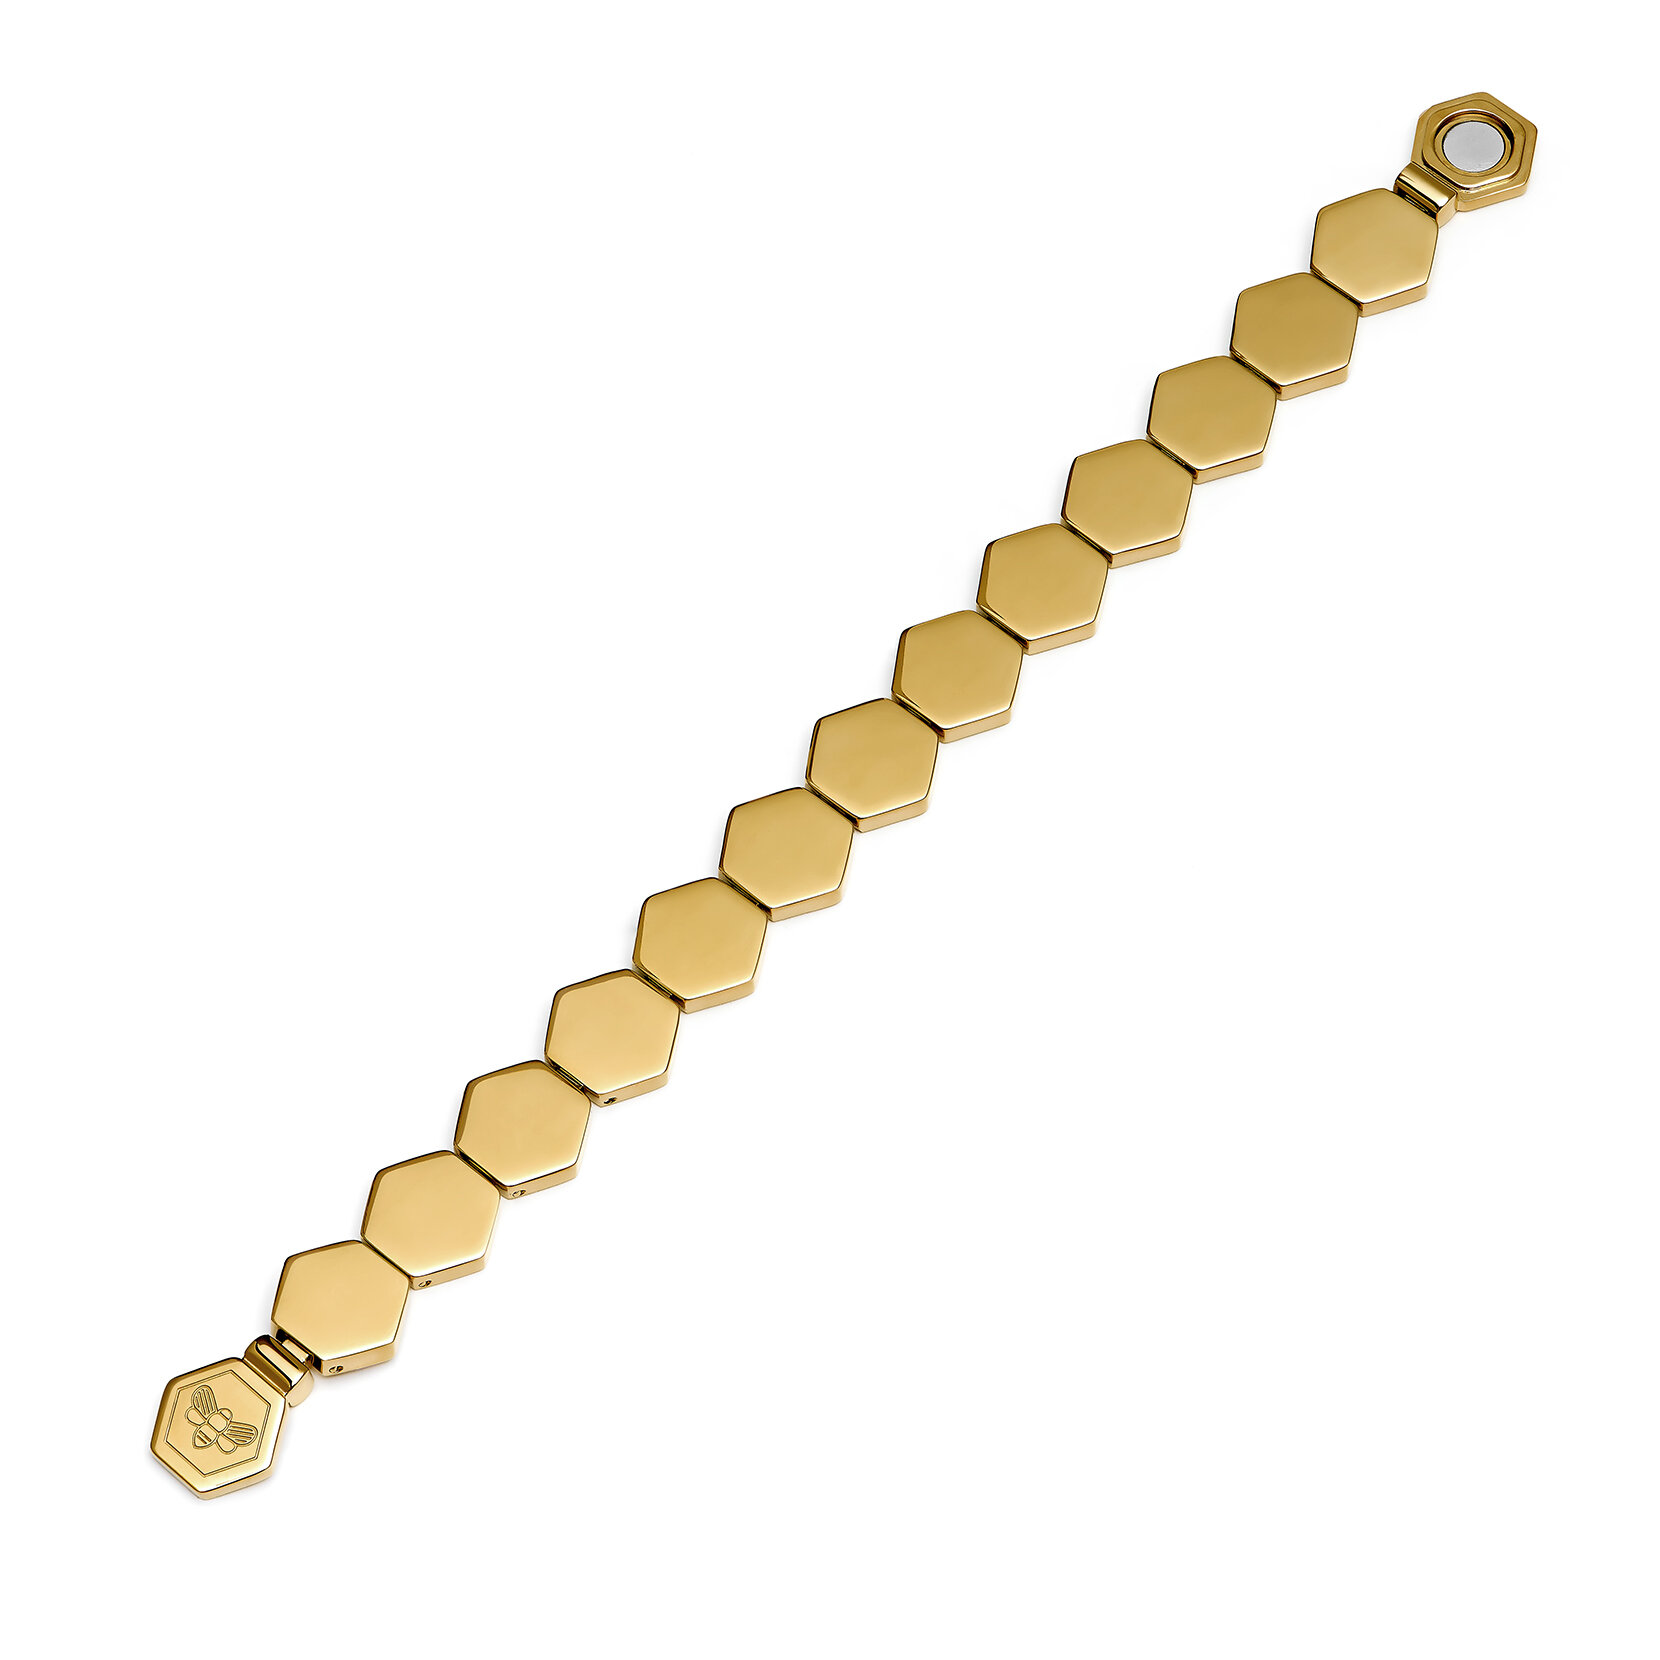 Honeycomb Gold Plated Slim Cuff Bracelet